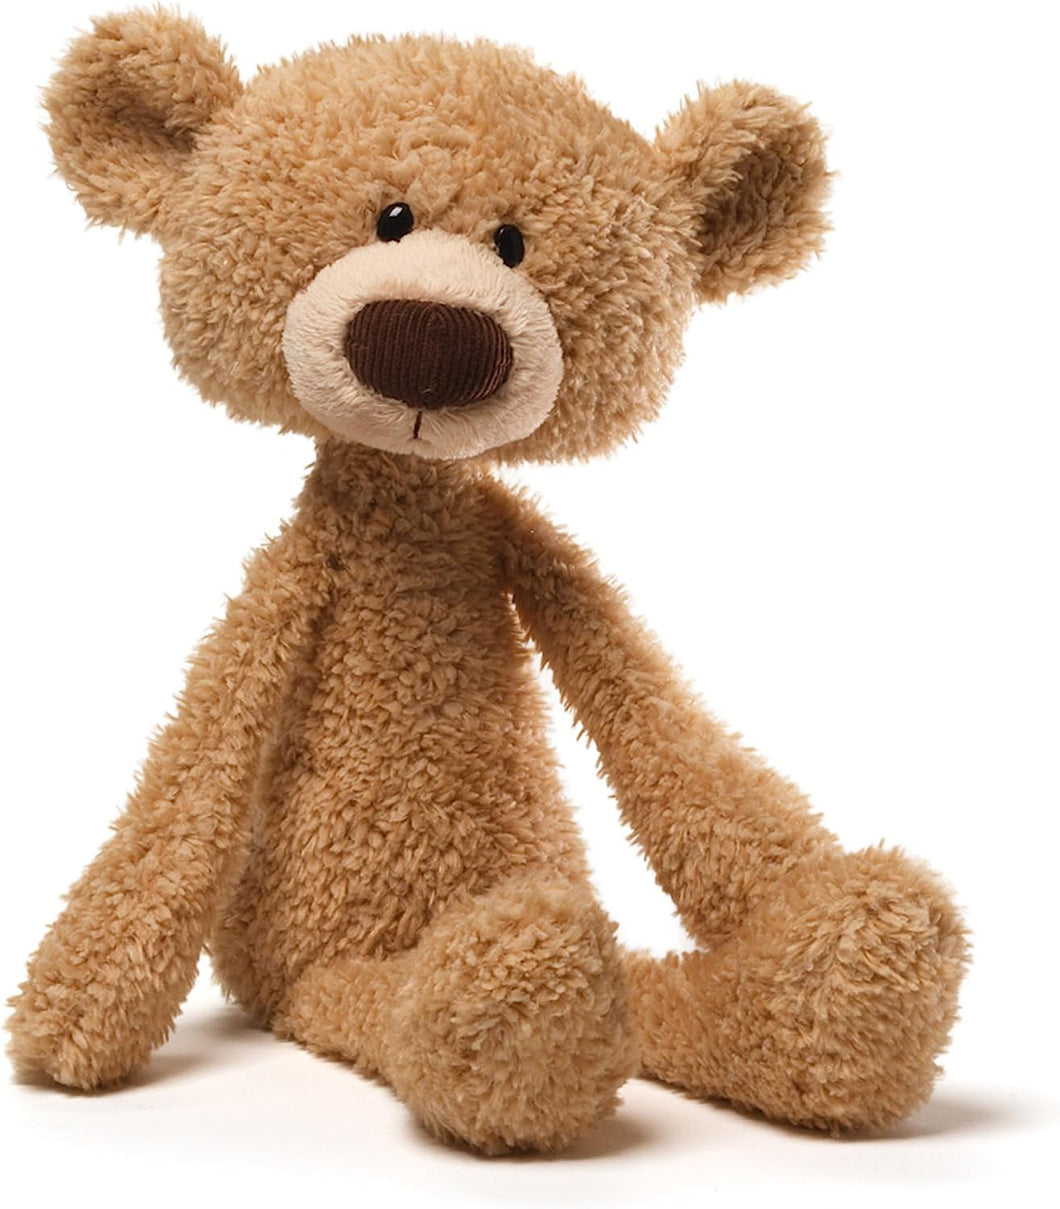 GUND Toothpick, Classic Teddy Bear Stuffed Animal 15 Inch